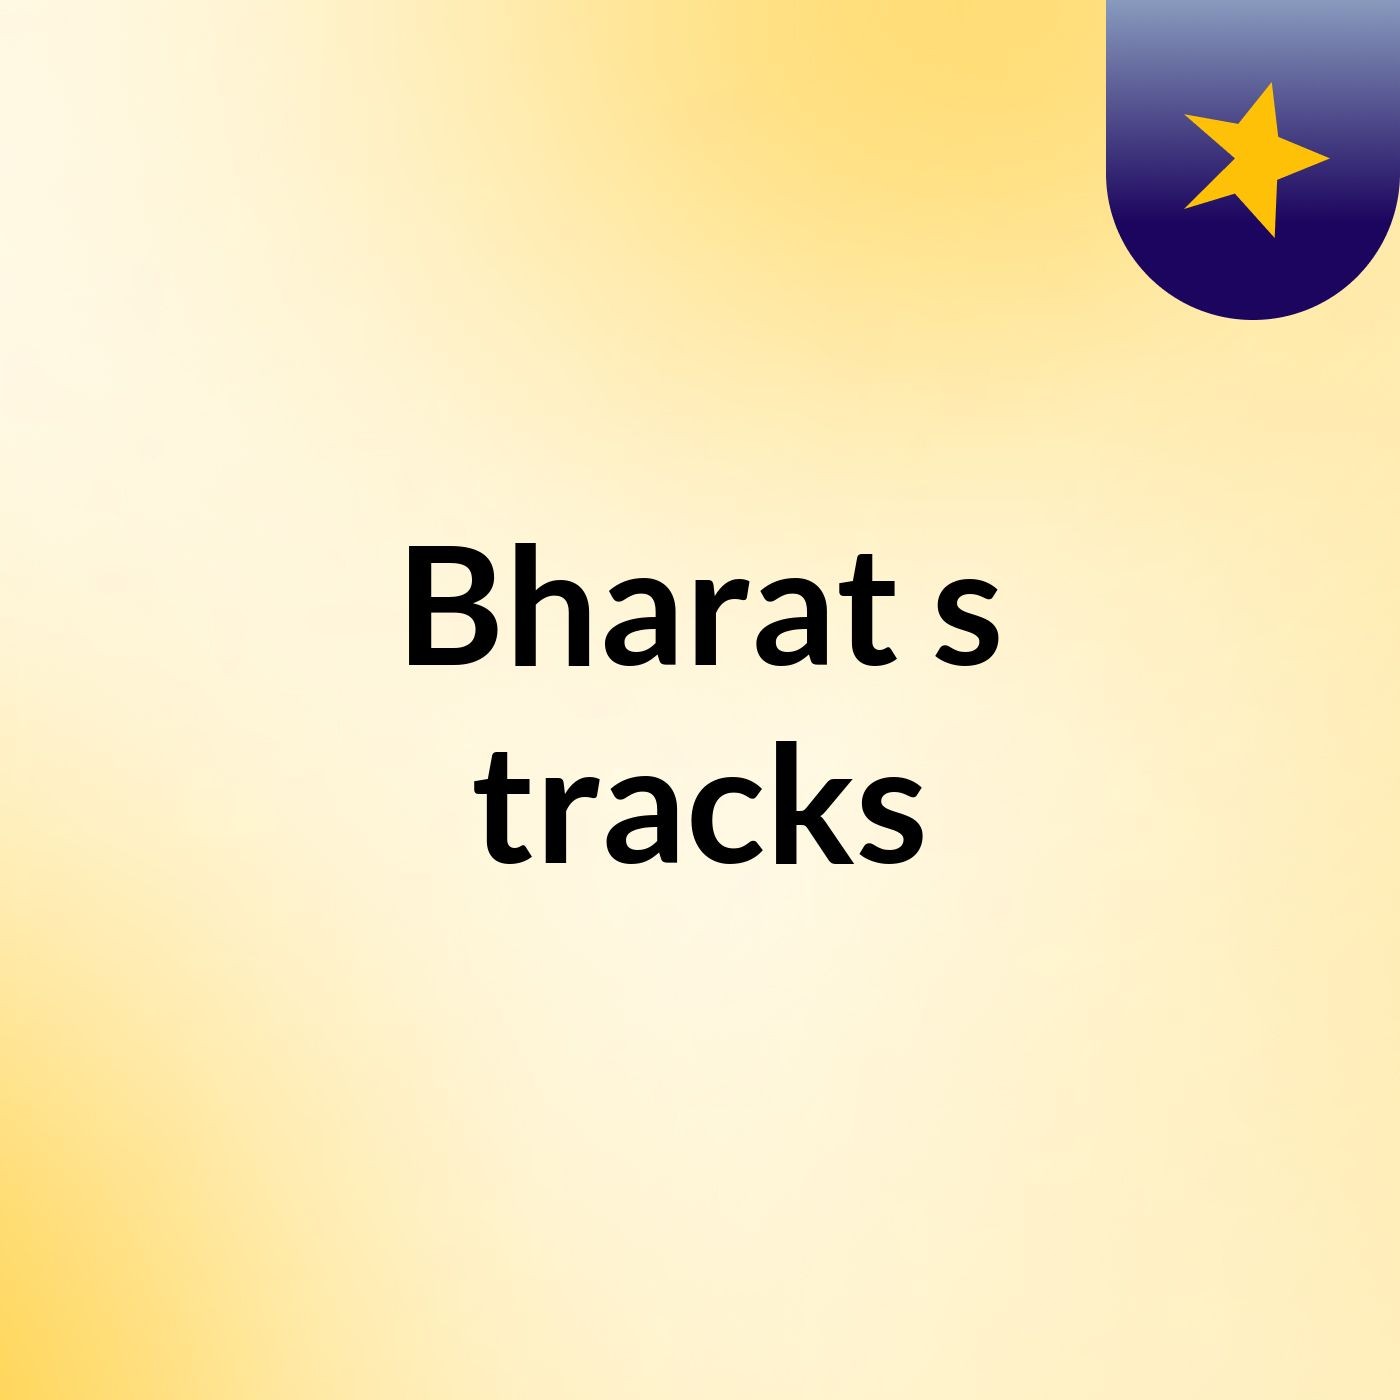 Bharat's tracks